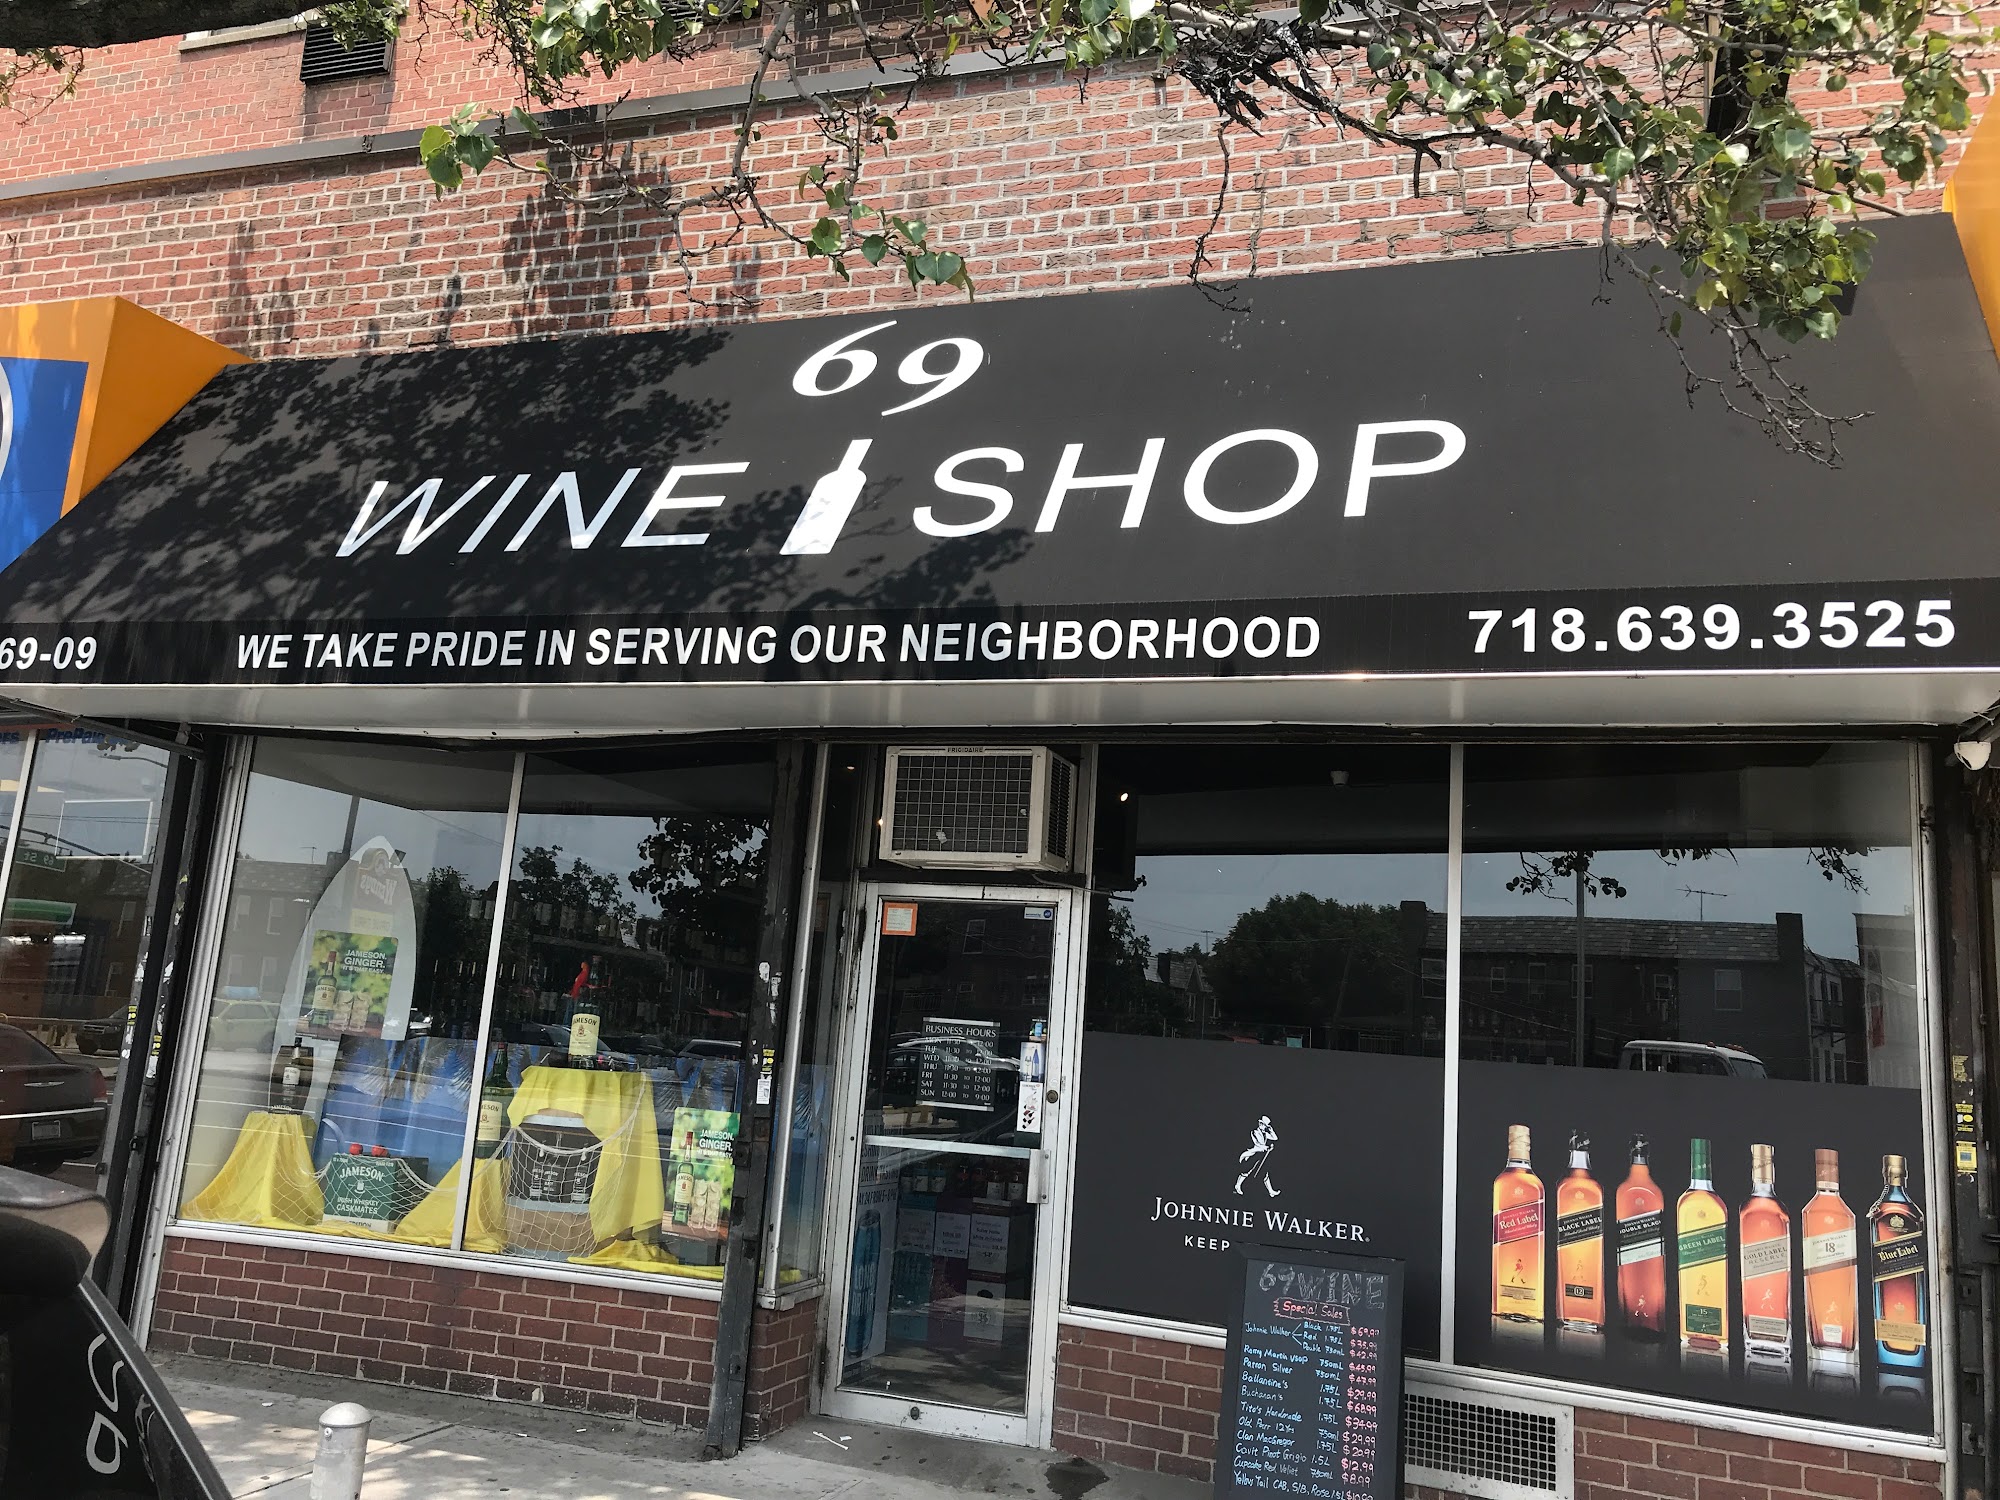 69 wine shop